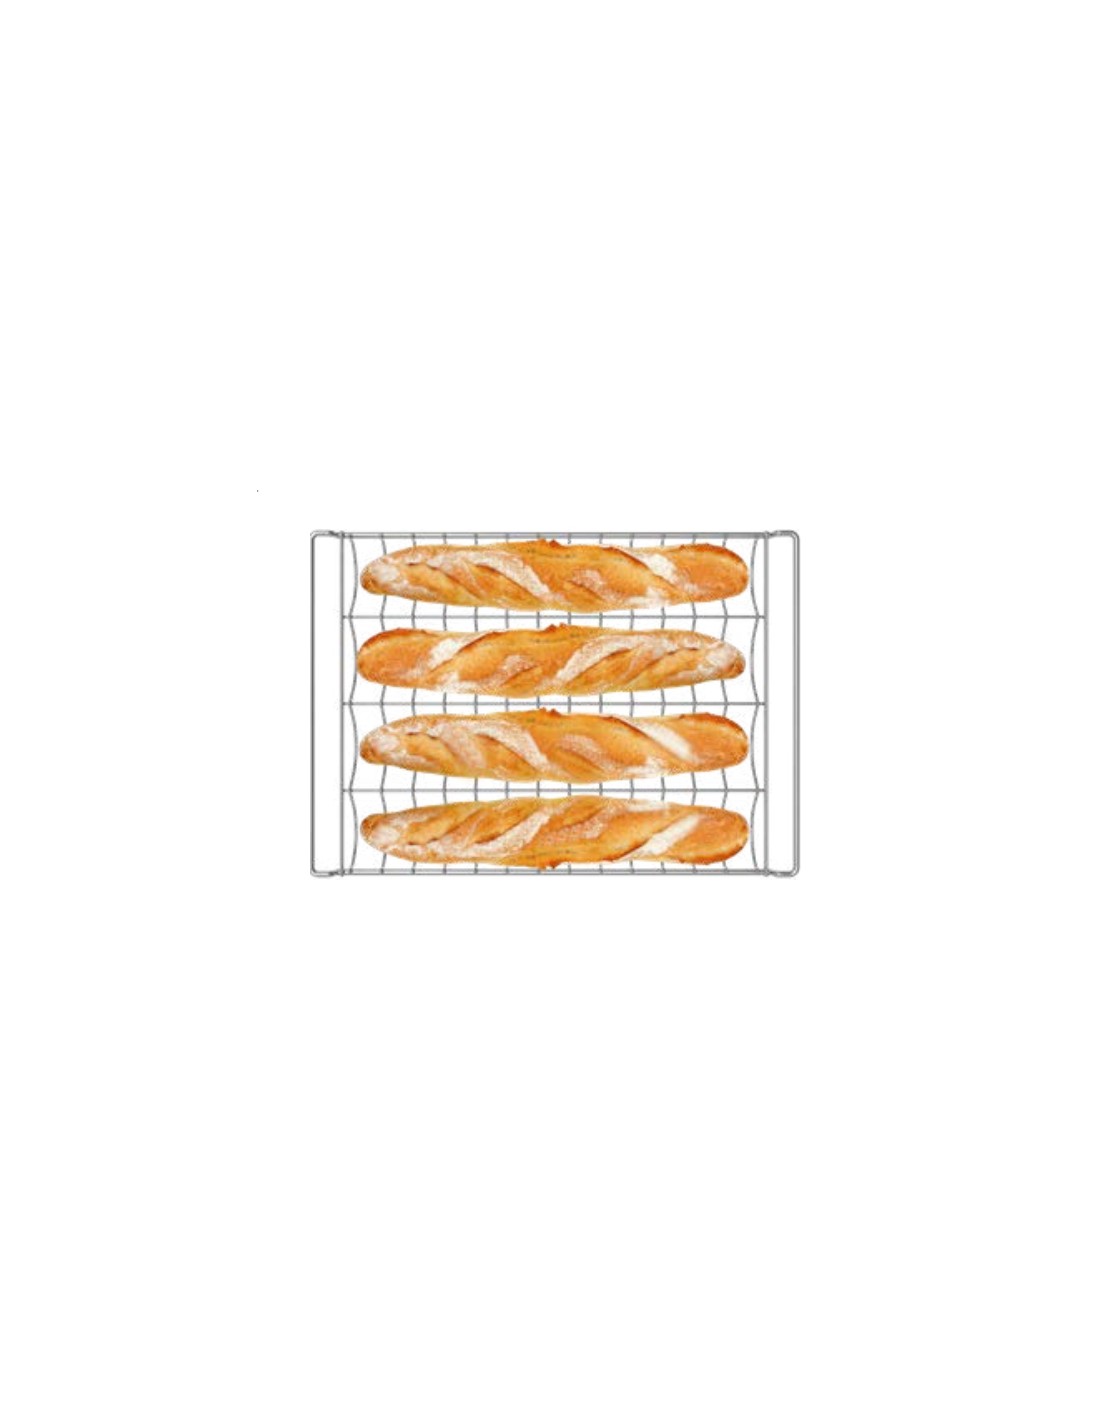 Tarpaulina ultraligera de 4 canales - Ideal para baguettes congeladas, filántropos congelados - Hasta 8 mini baguettes en